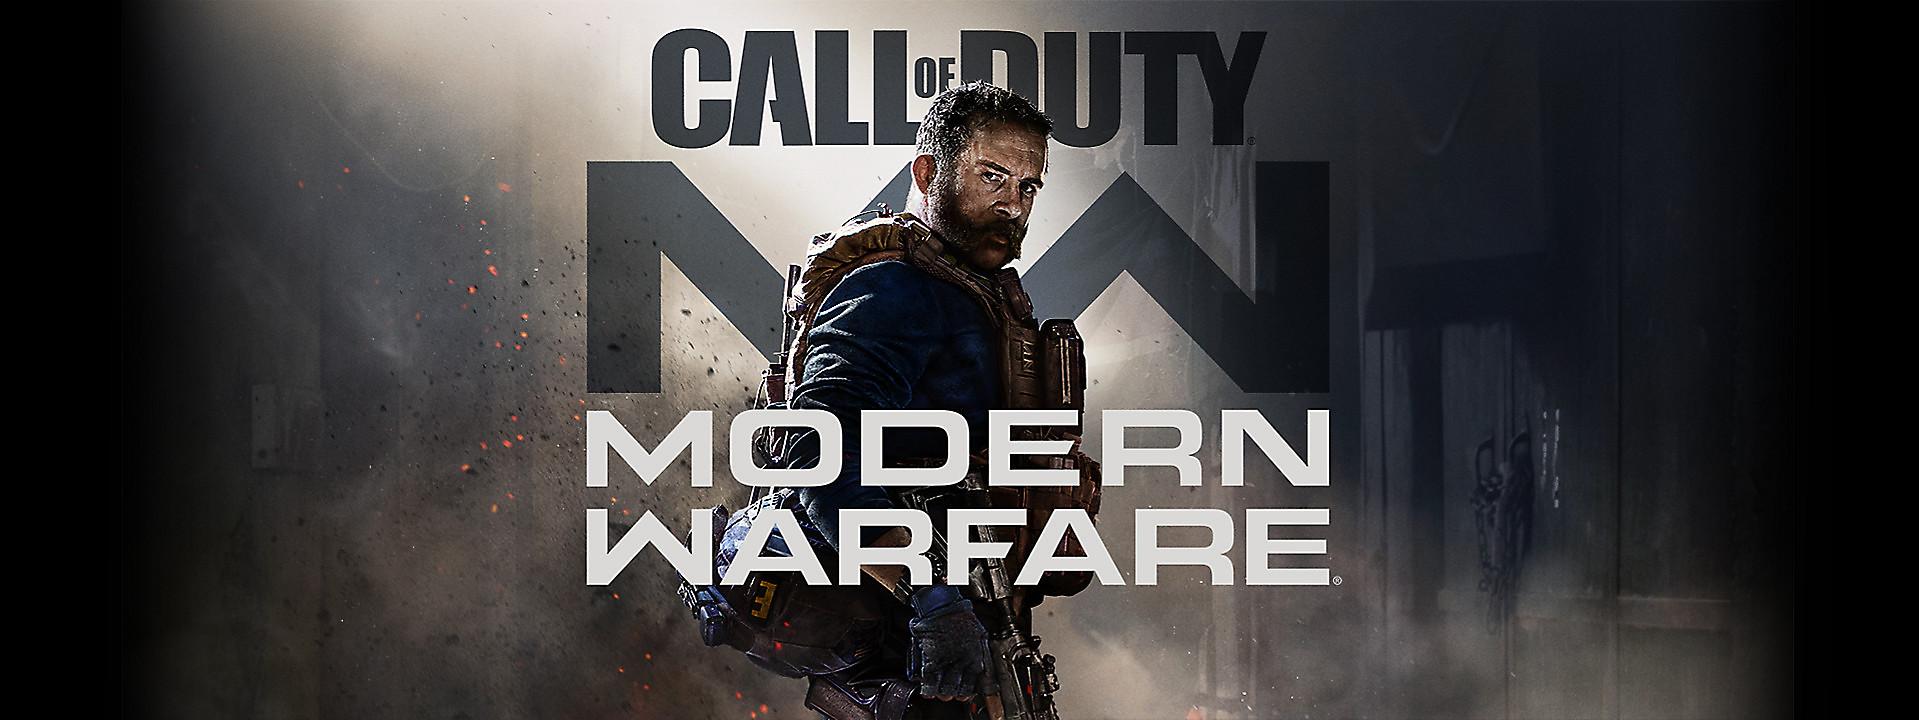 Call of duty modern warfare 4 free. download full version for mac